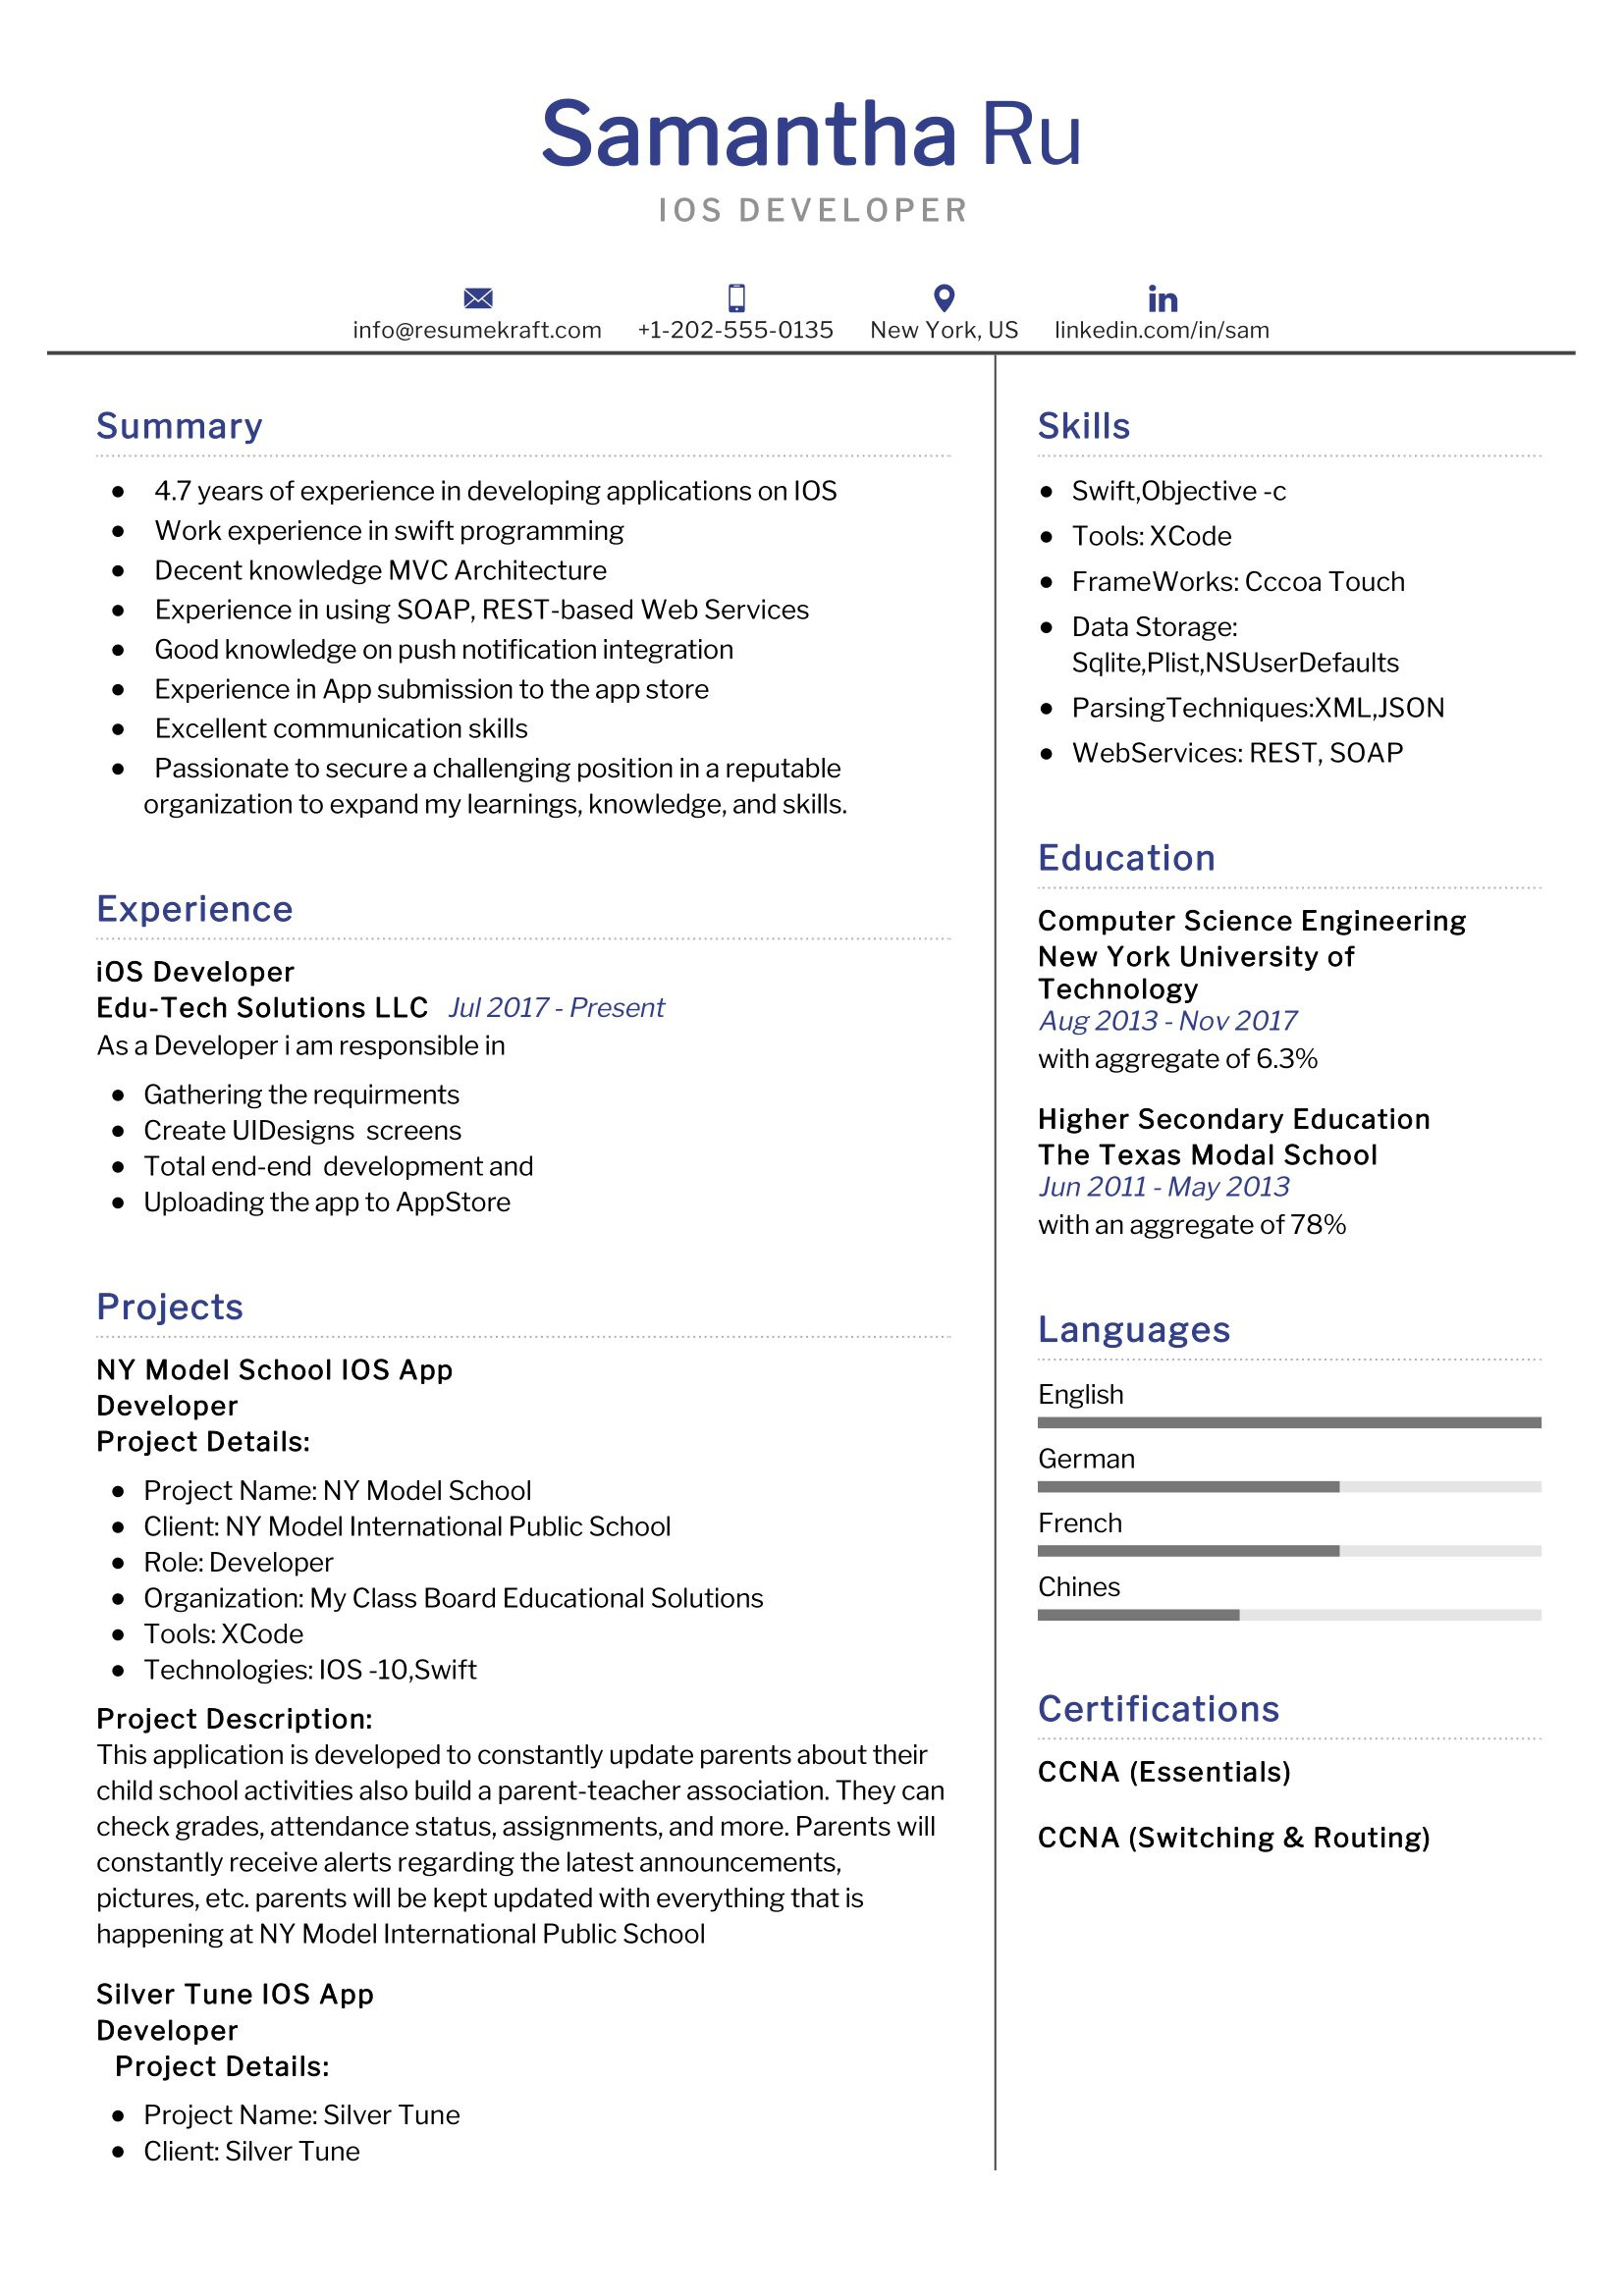 IOS Developer Resume Sample ResumeKraft